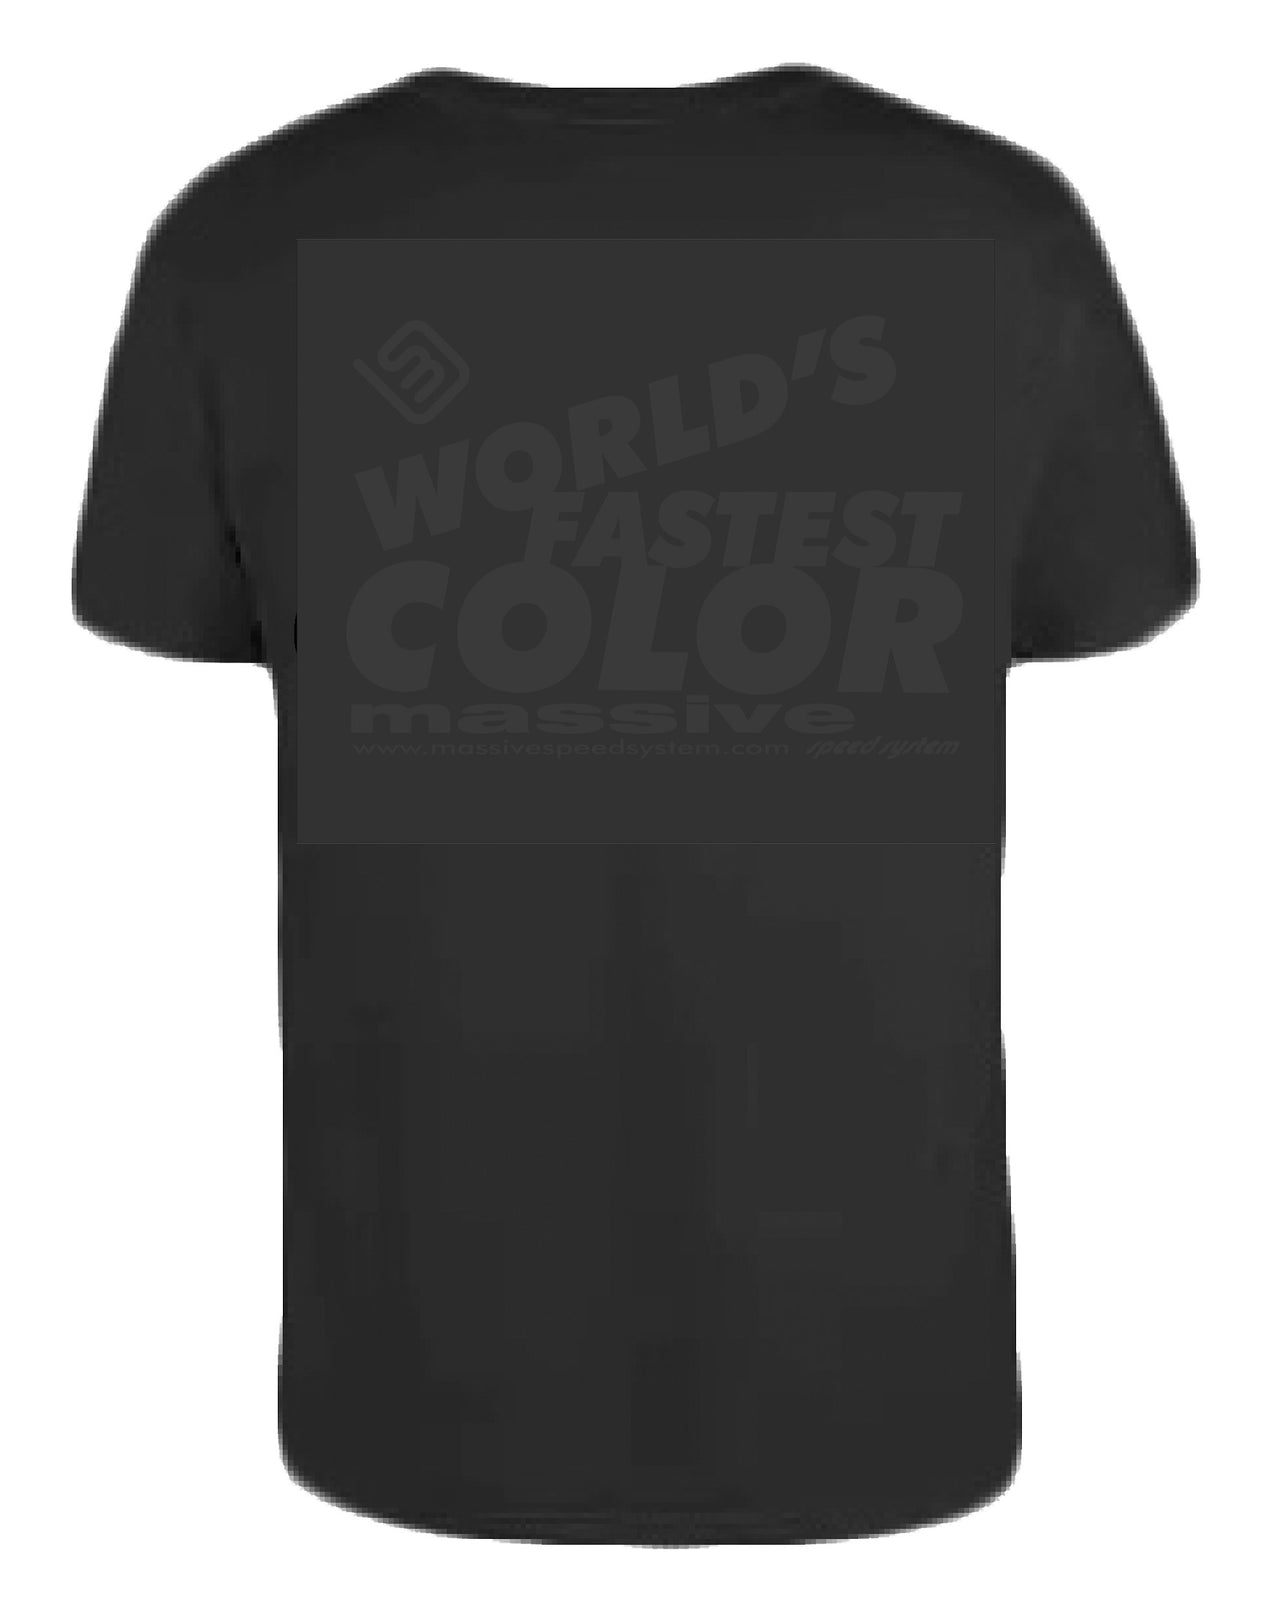 Massive Black-on-Black World's Fastest Color Tshirt - Massive Speed System